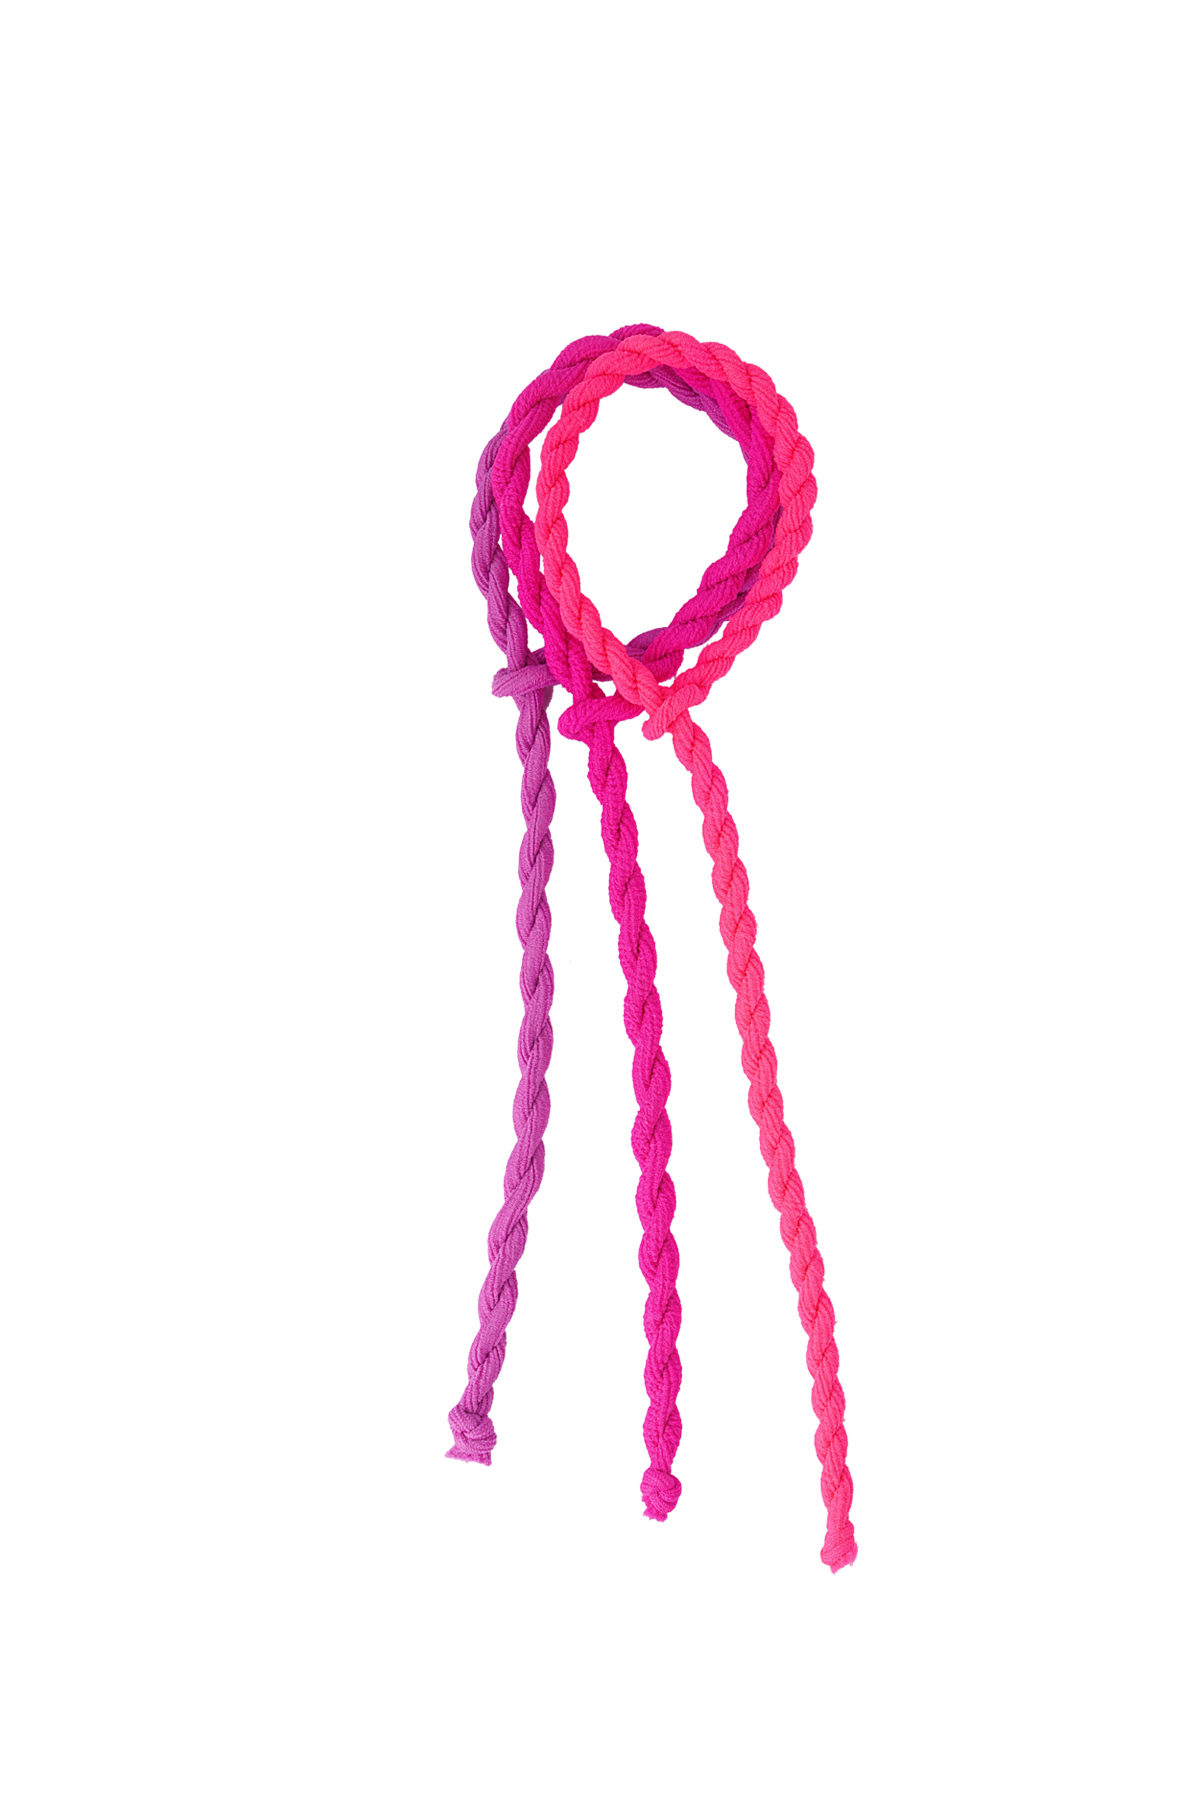 Twisted hair elastic - pink & purple 